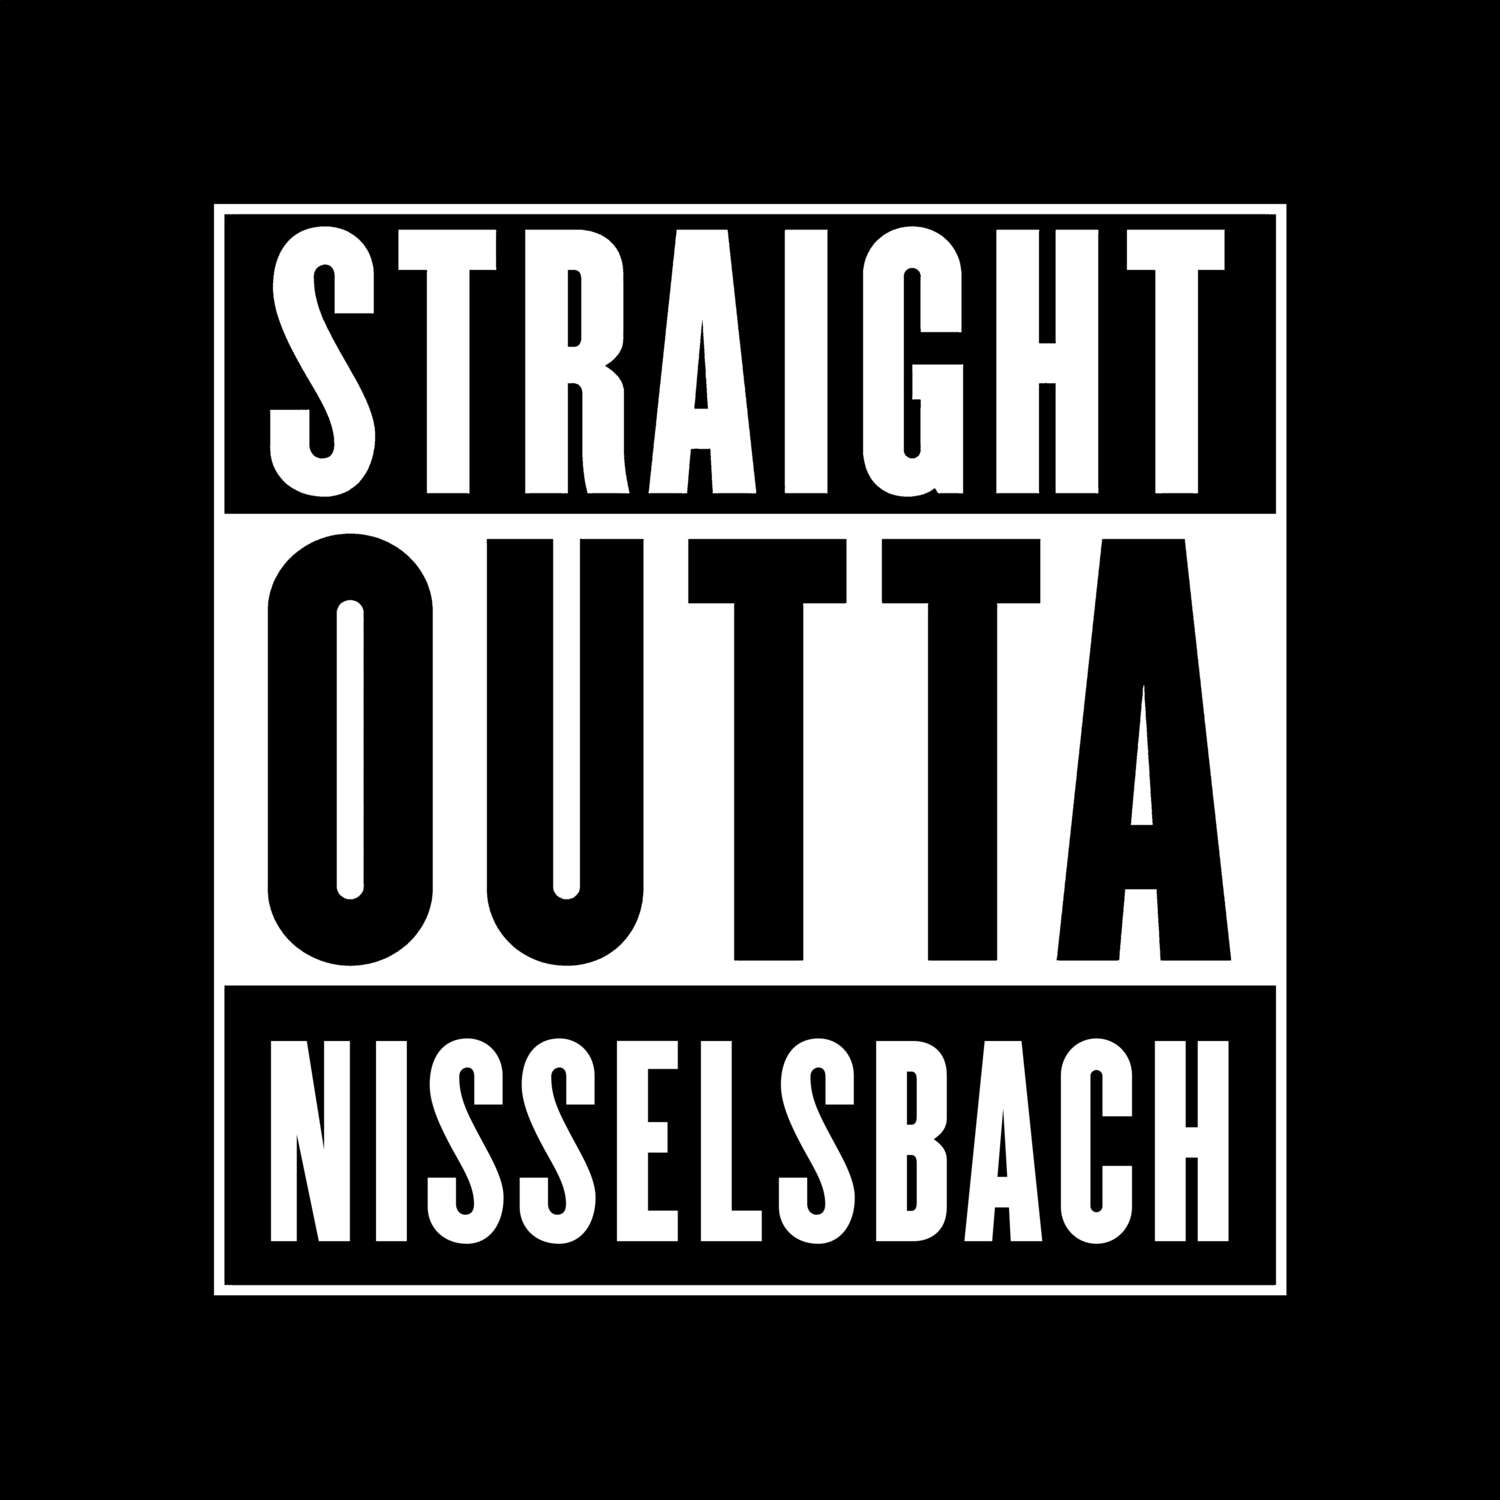 Nisselsbach T-Shirt »Straight Outta«